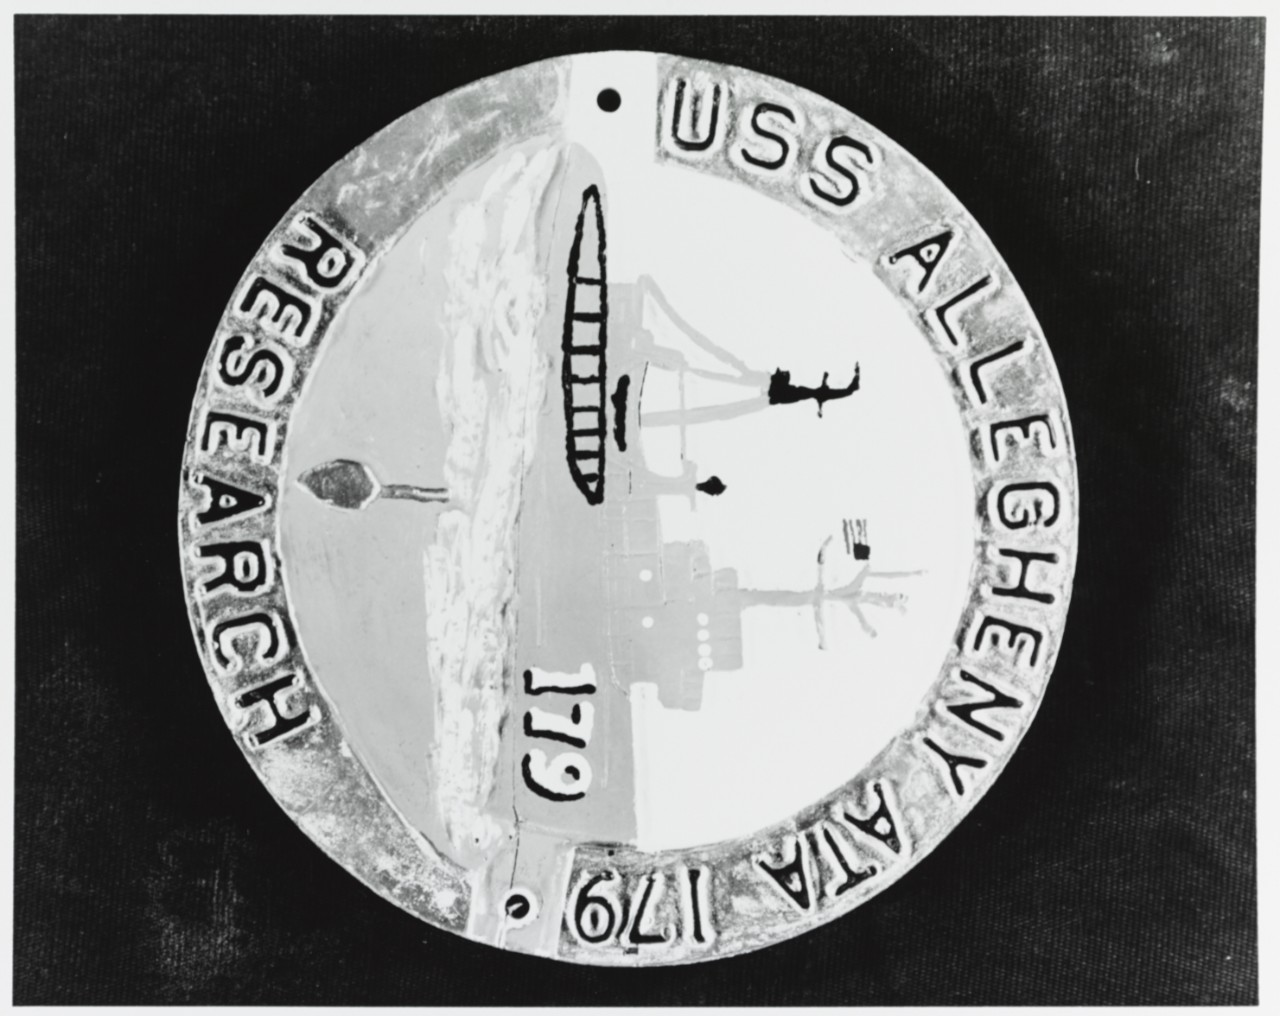 Insignia: USS ALLEGHENY (ATA-179)